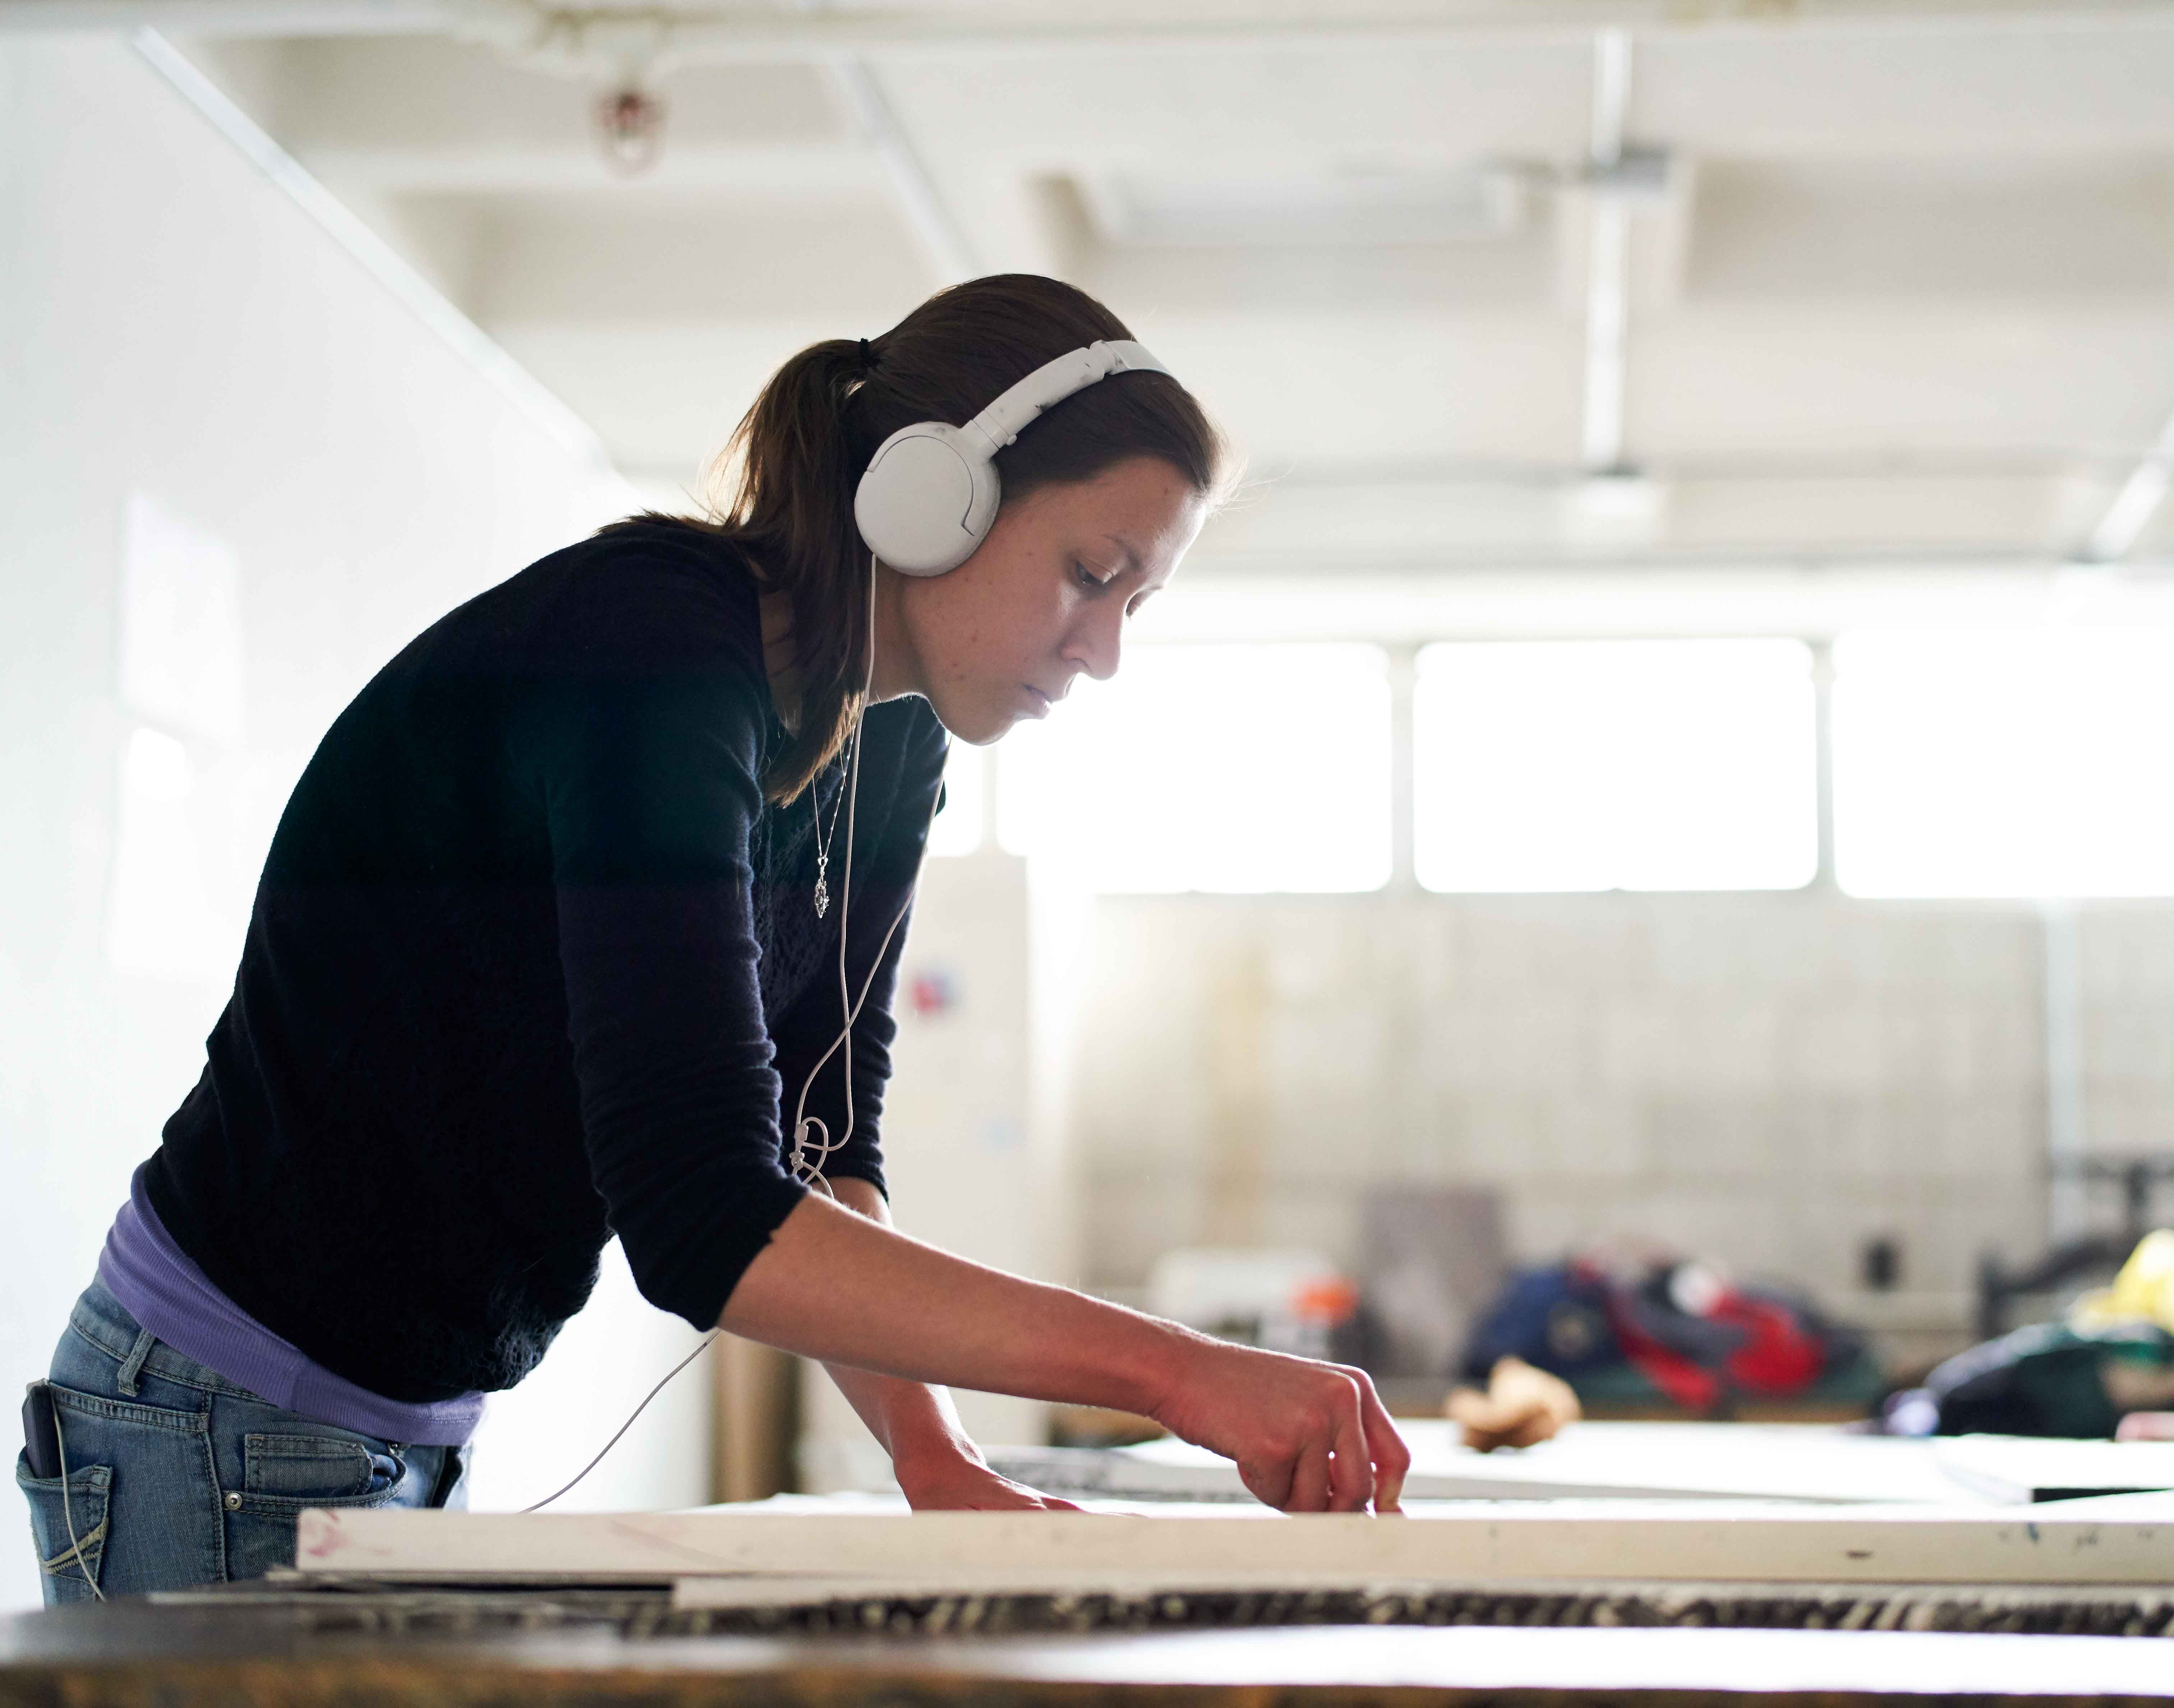 Art student in a studio with headphones on